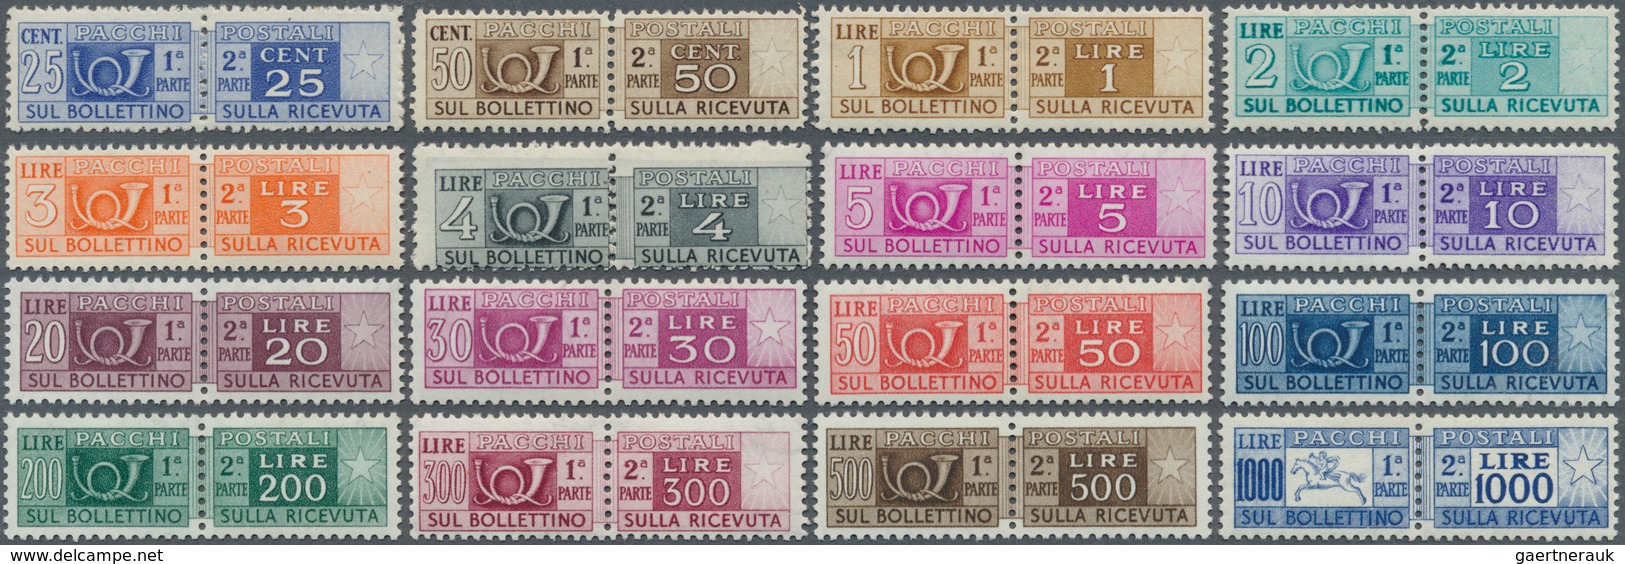 01003 Italien - Paketmarken: 1946/1954, "Post Horn/Cavallino/Cypher" Wm. "Winged Wheel", 25c. To 1000l. Co - Postpaketten